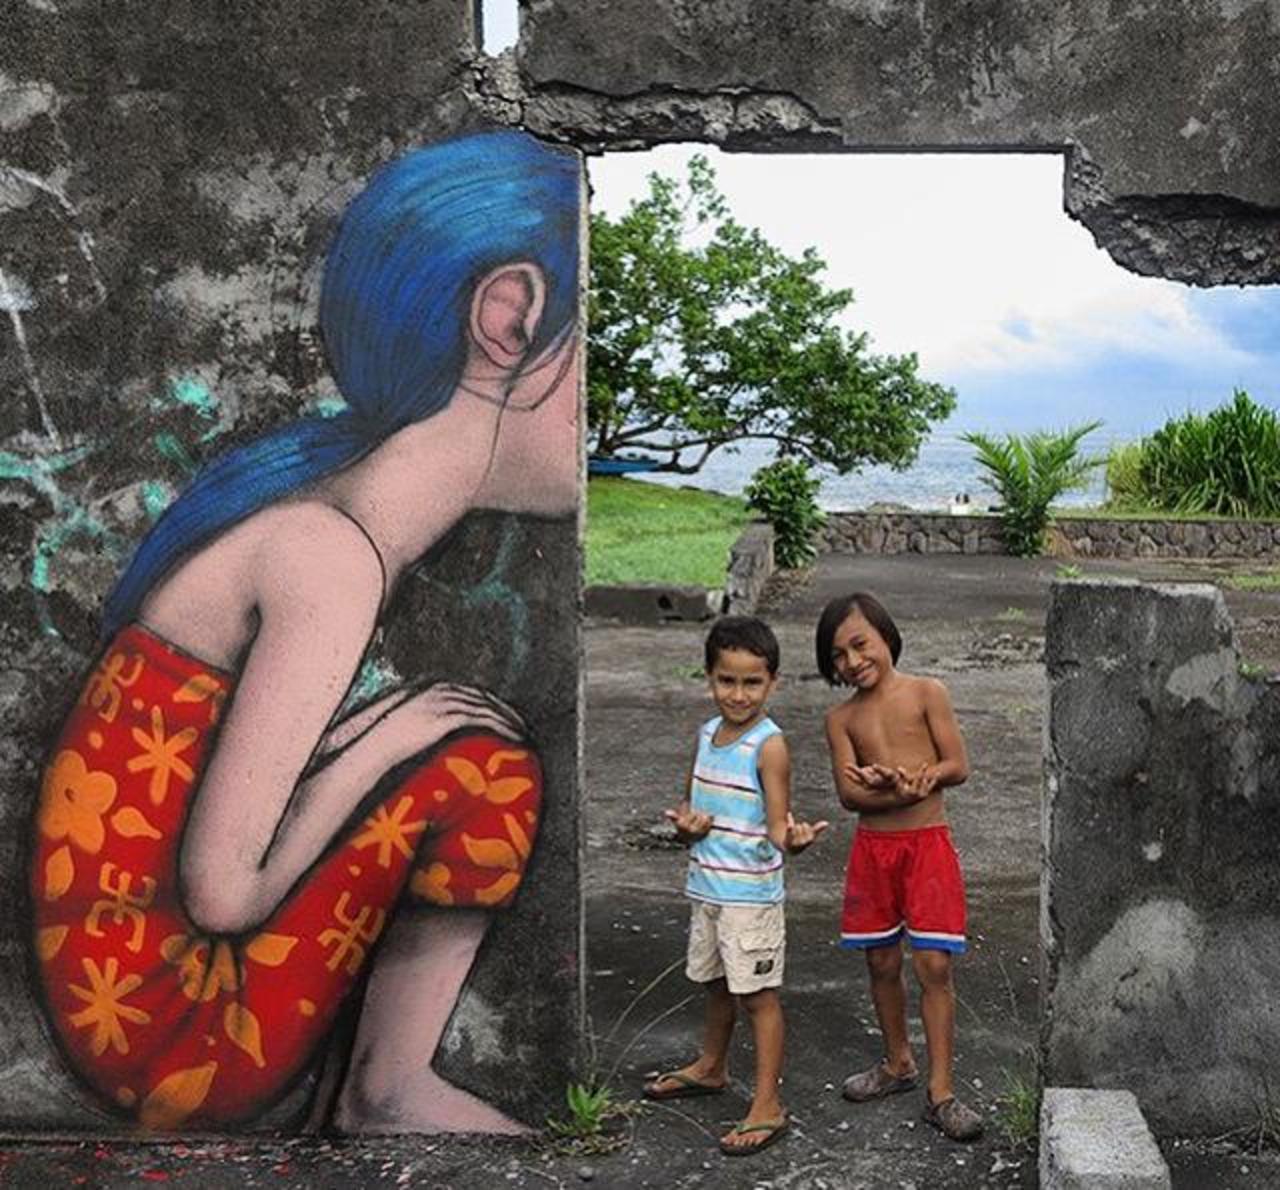 Street Art wall by Seth Globepainter in Mataiea, Tahiti 

#art #arte #graffiti #streetart http://t.co/6x7KfElaZQ